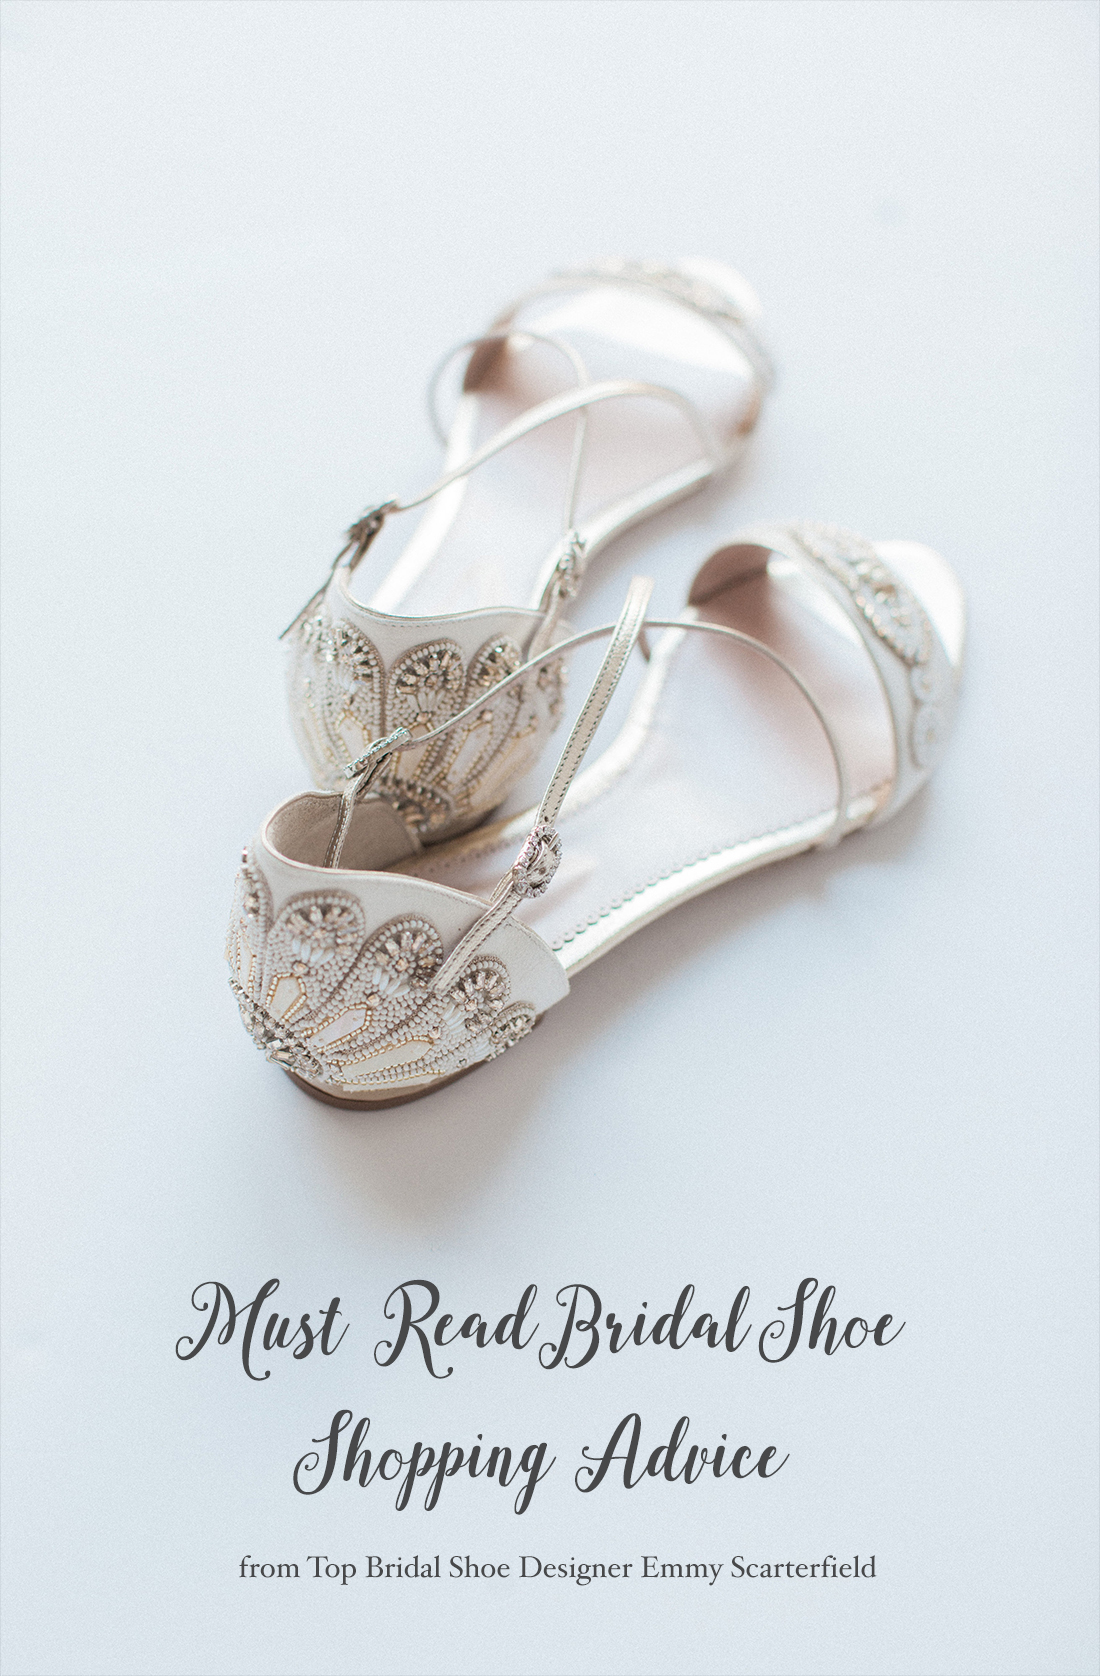 Top Bridal Shoe Shopping Advice